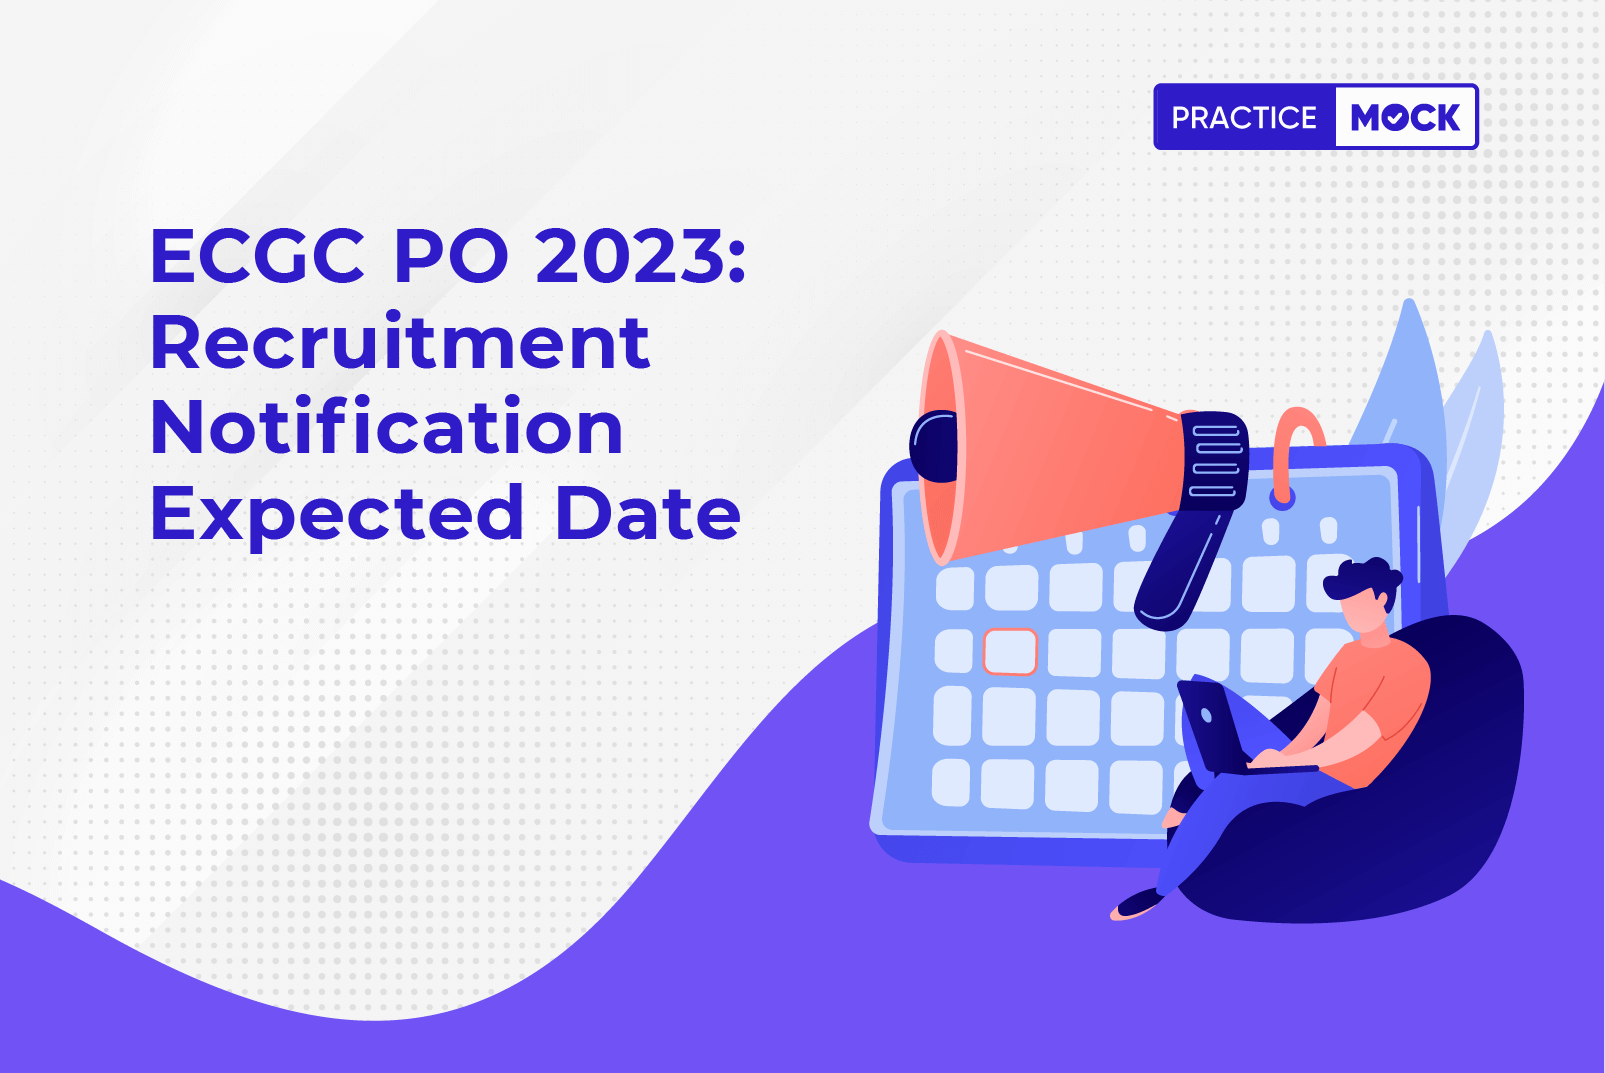 ECGC PO Recruitment Notification